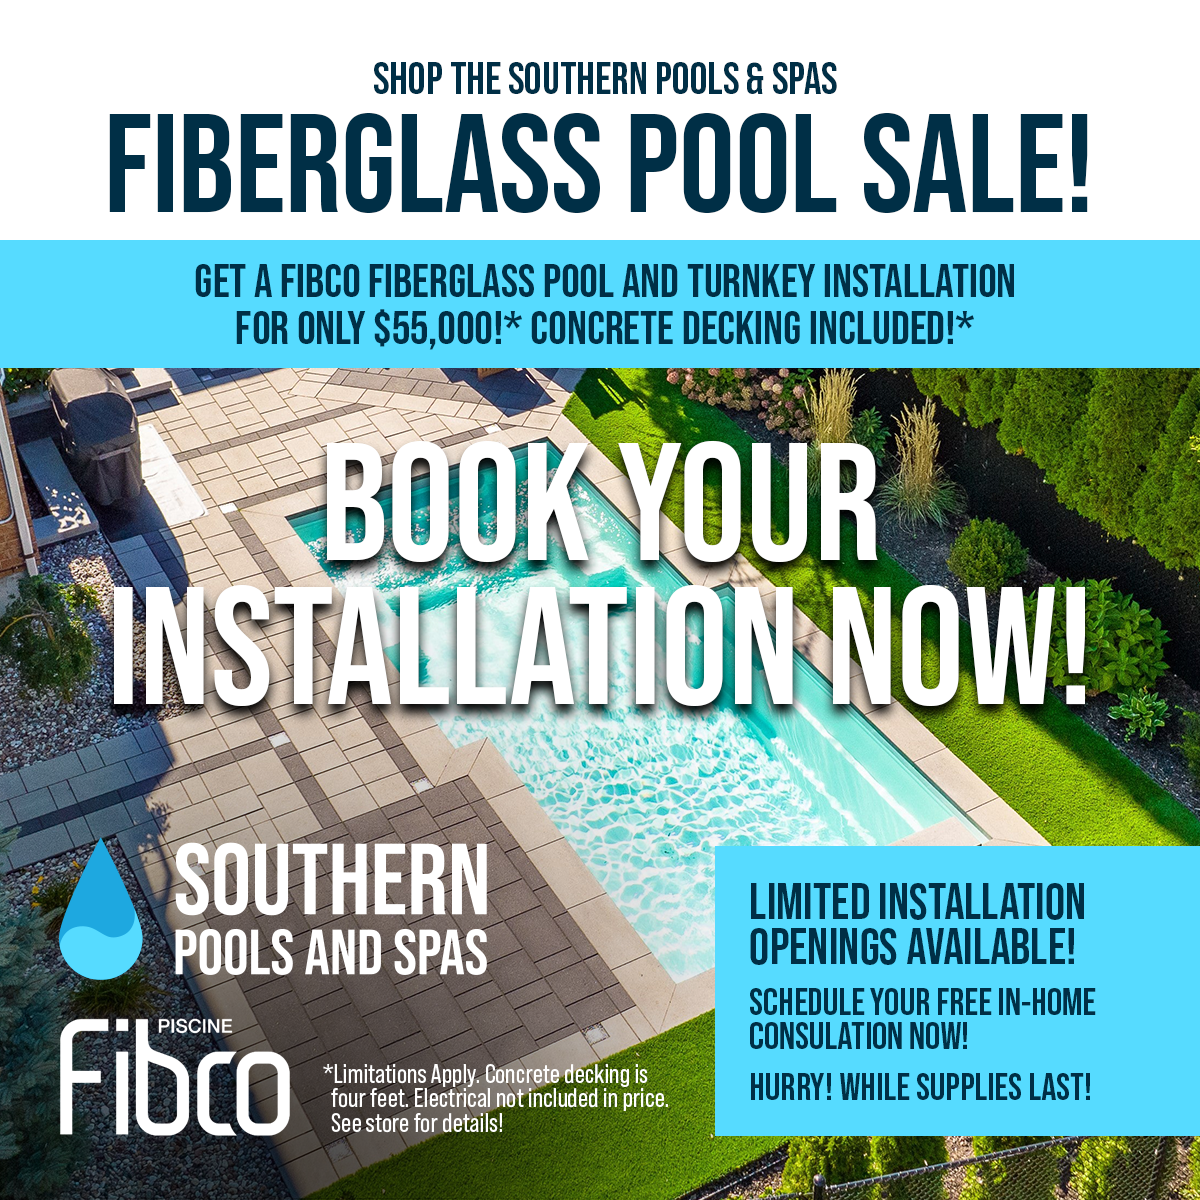 Fiberglass Pool Sale!